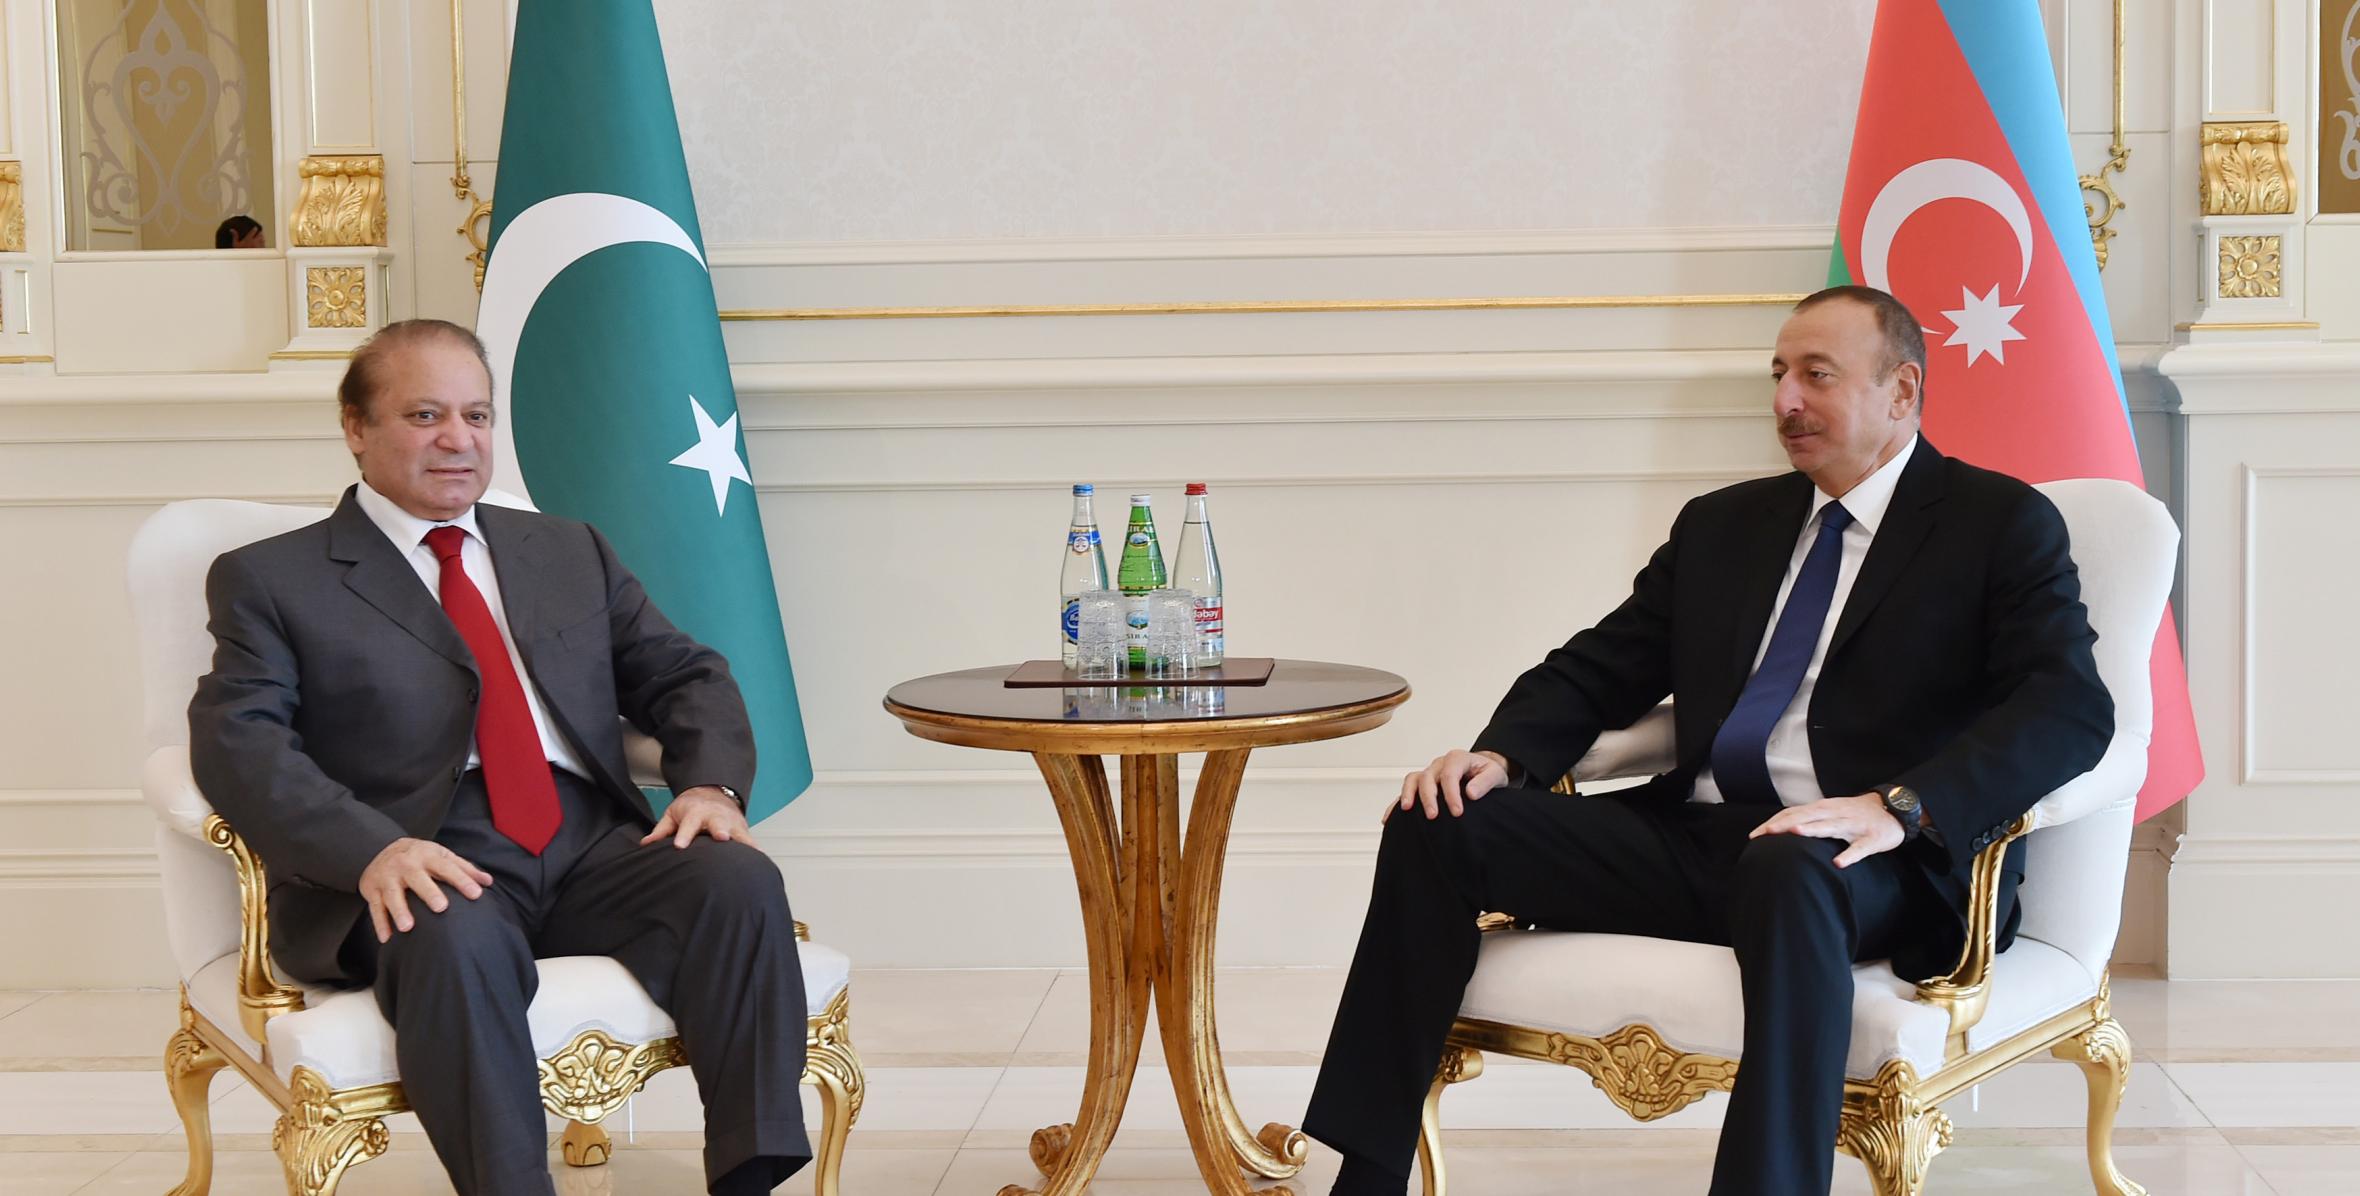 Ilham Aliyev met with Pakistani Prime Minister Muhammad Nawaz Sharif in limited format